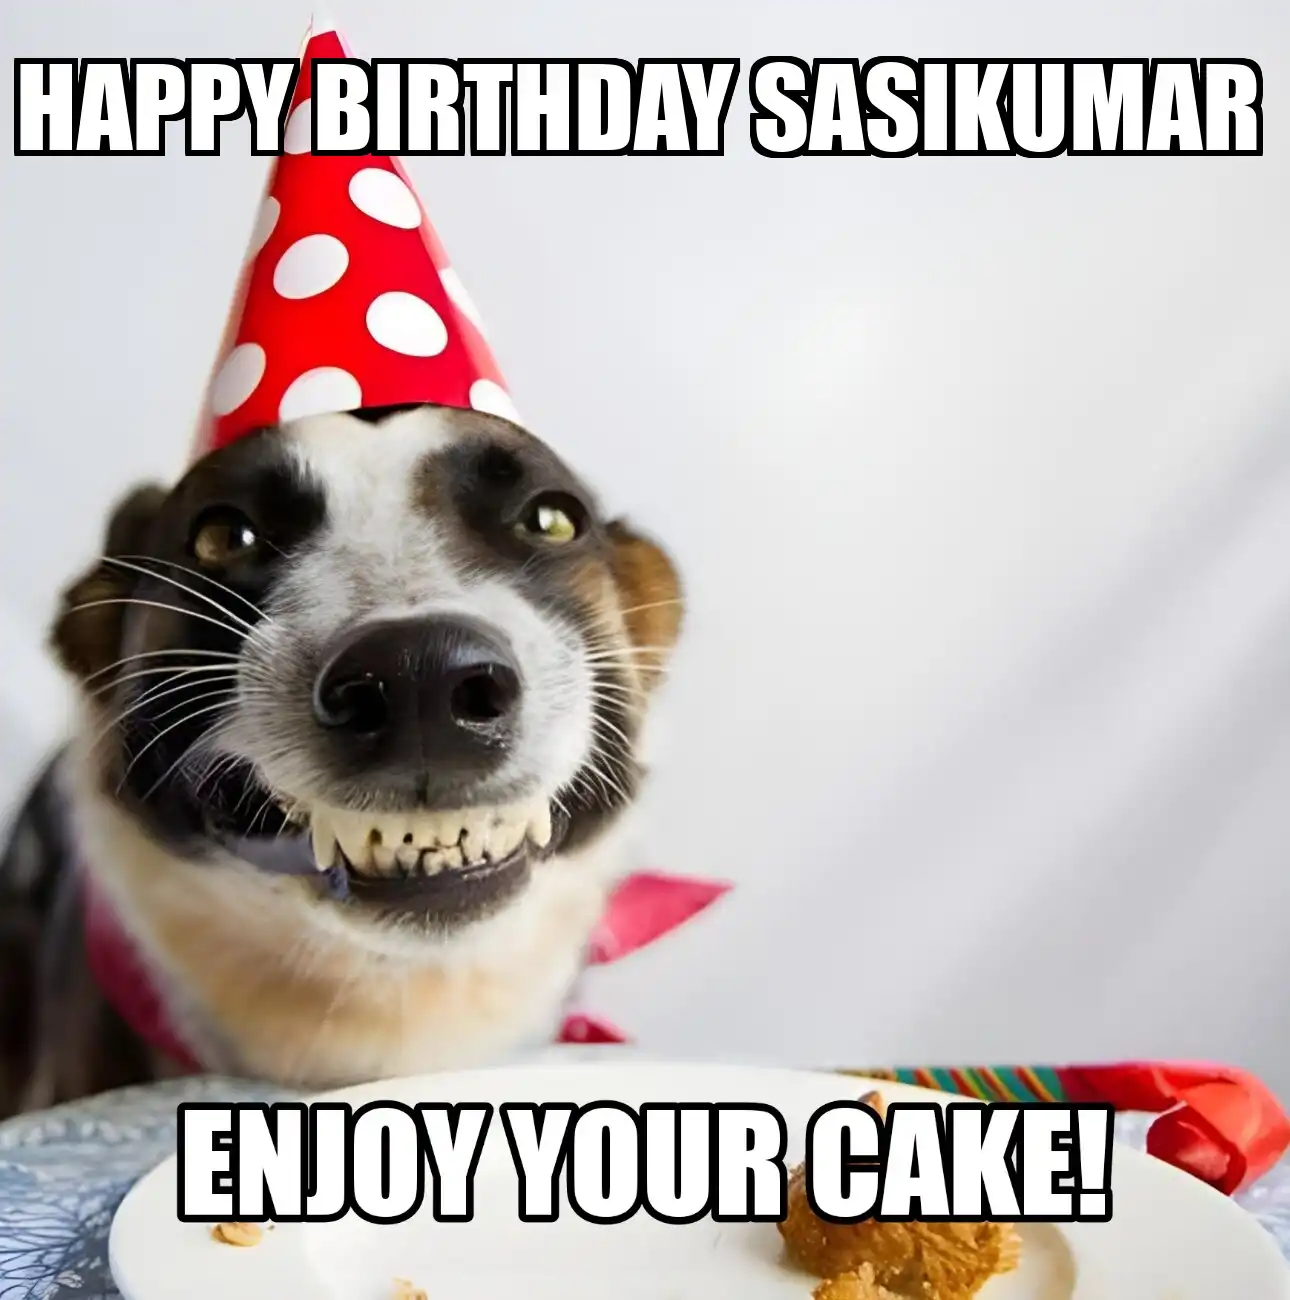 Happy Birthday Sasikumar Enjoy Your Cake Dog Meme